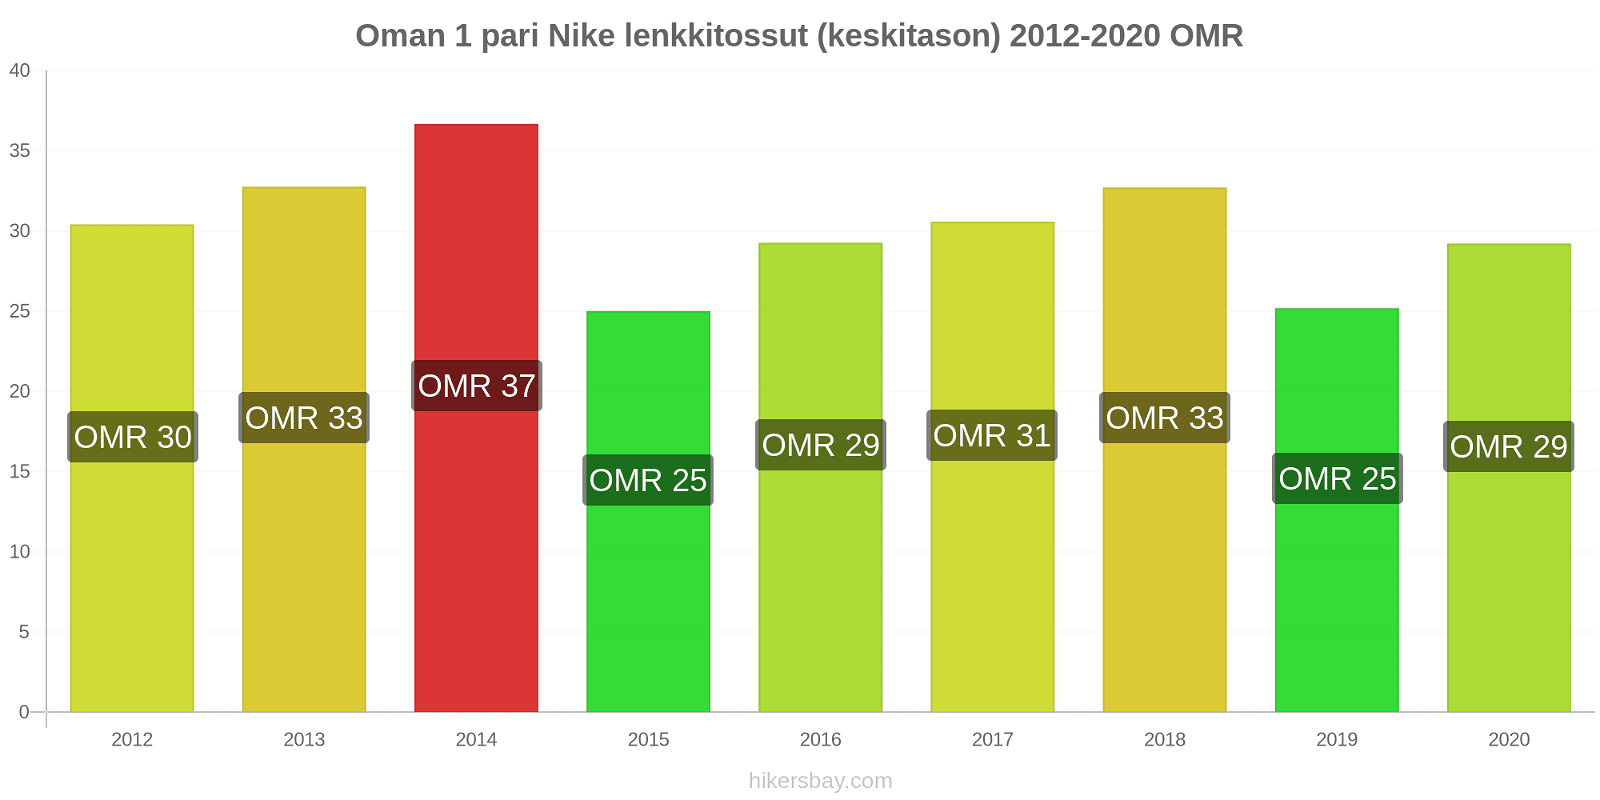 Oman hintojen muutokset 1 pari Nike lenkkitossut (keskitason) hikersbay.com